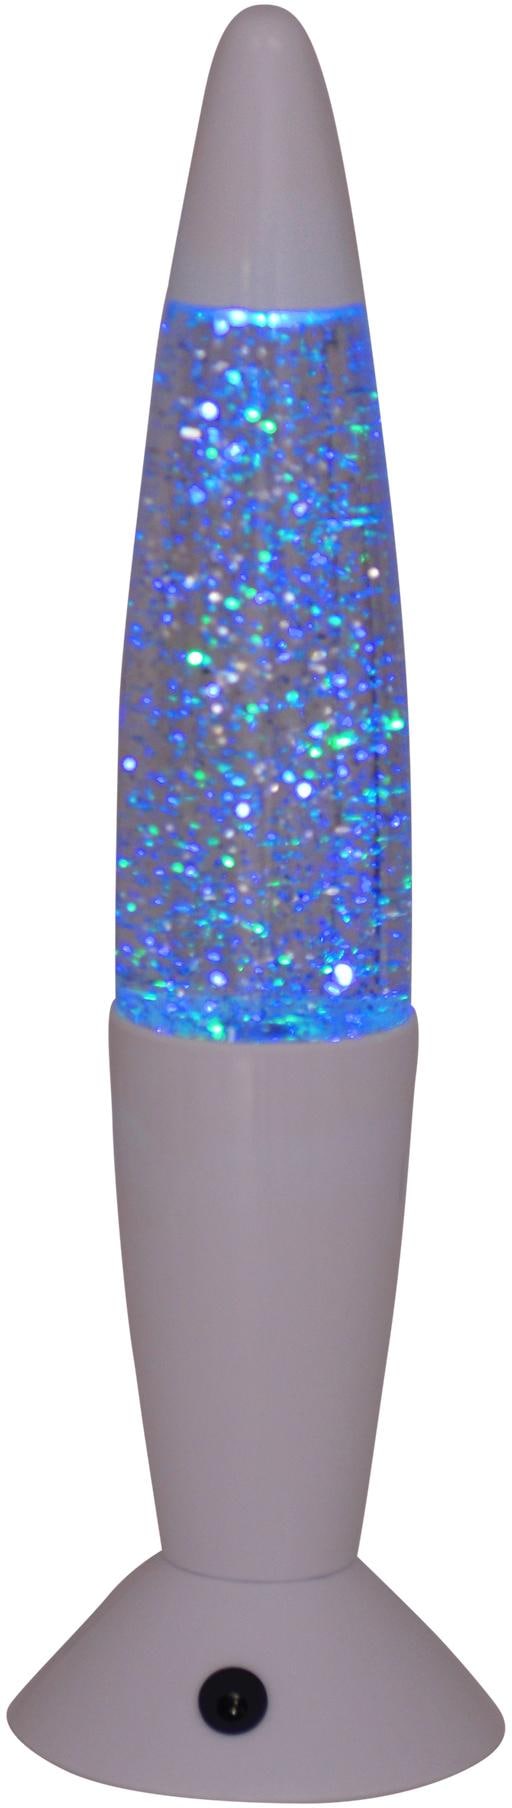 näve LED Tischleuchte »GLITTER«, Leuchtmittel LED-Board | LED fest integriert, Material: Metall/Kunststoff, Farbe: bunt, Ein- /Ausschalter